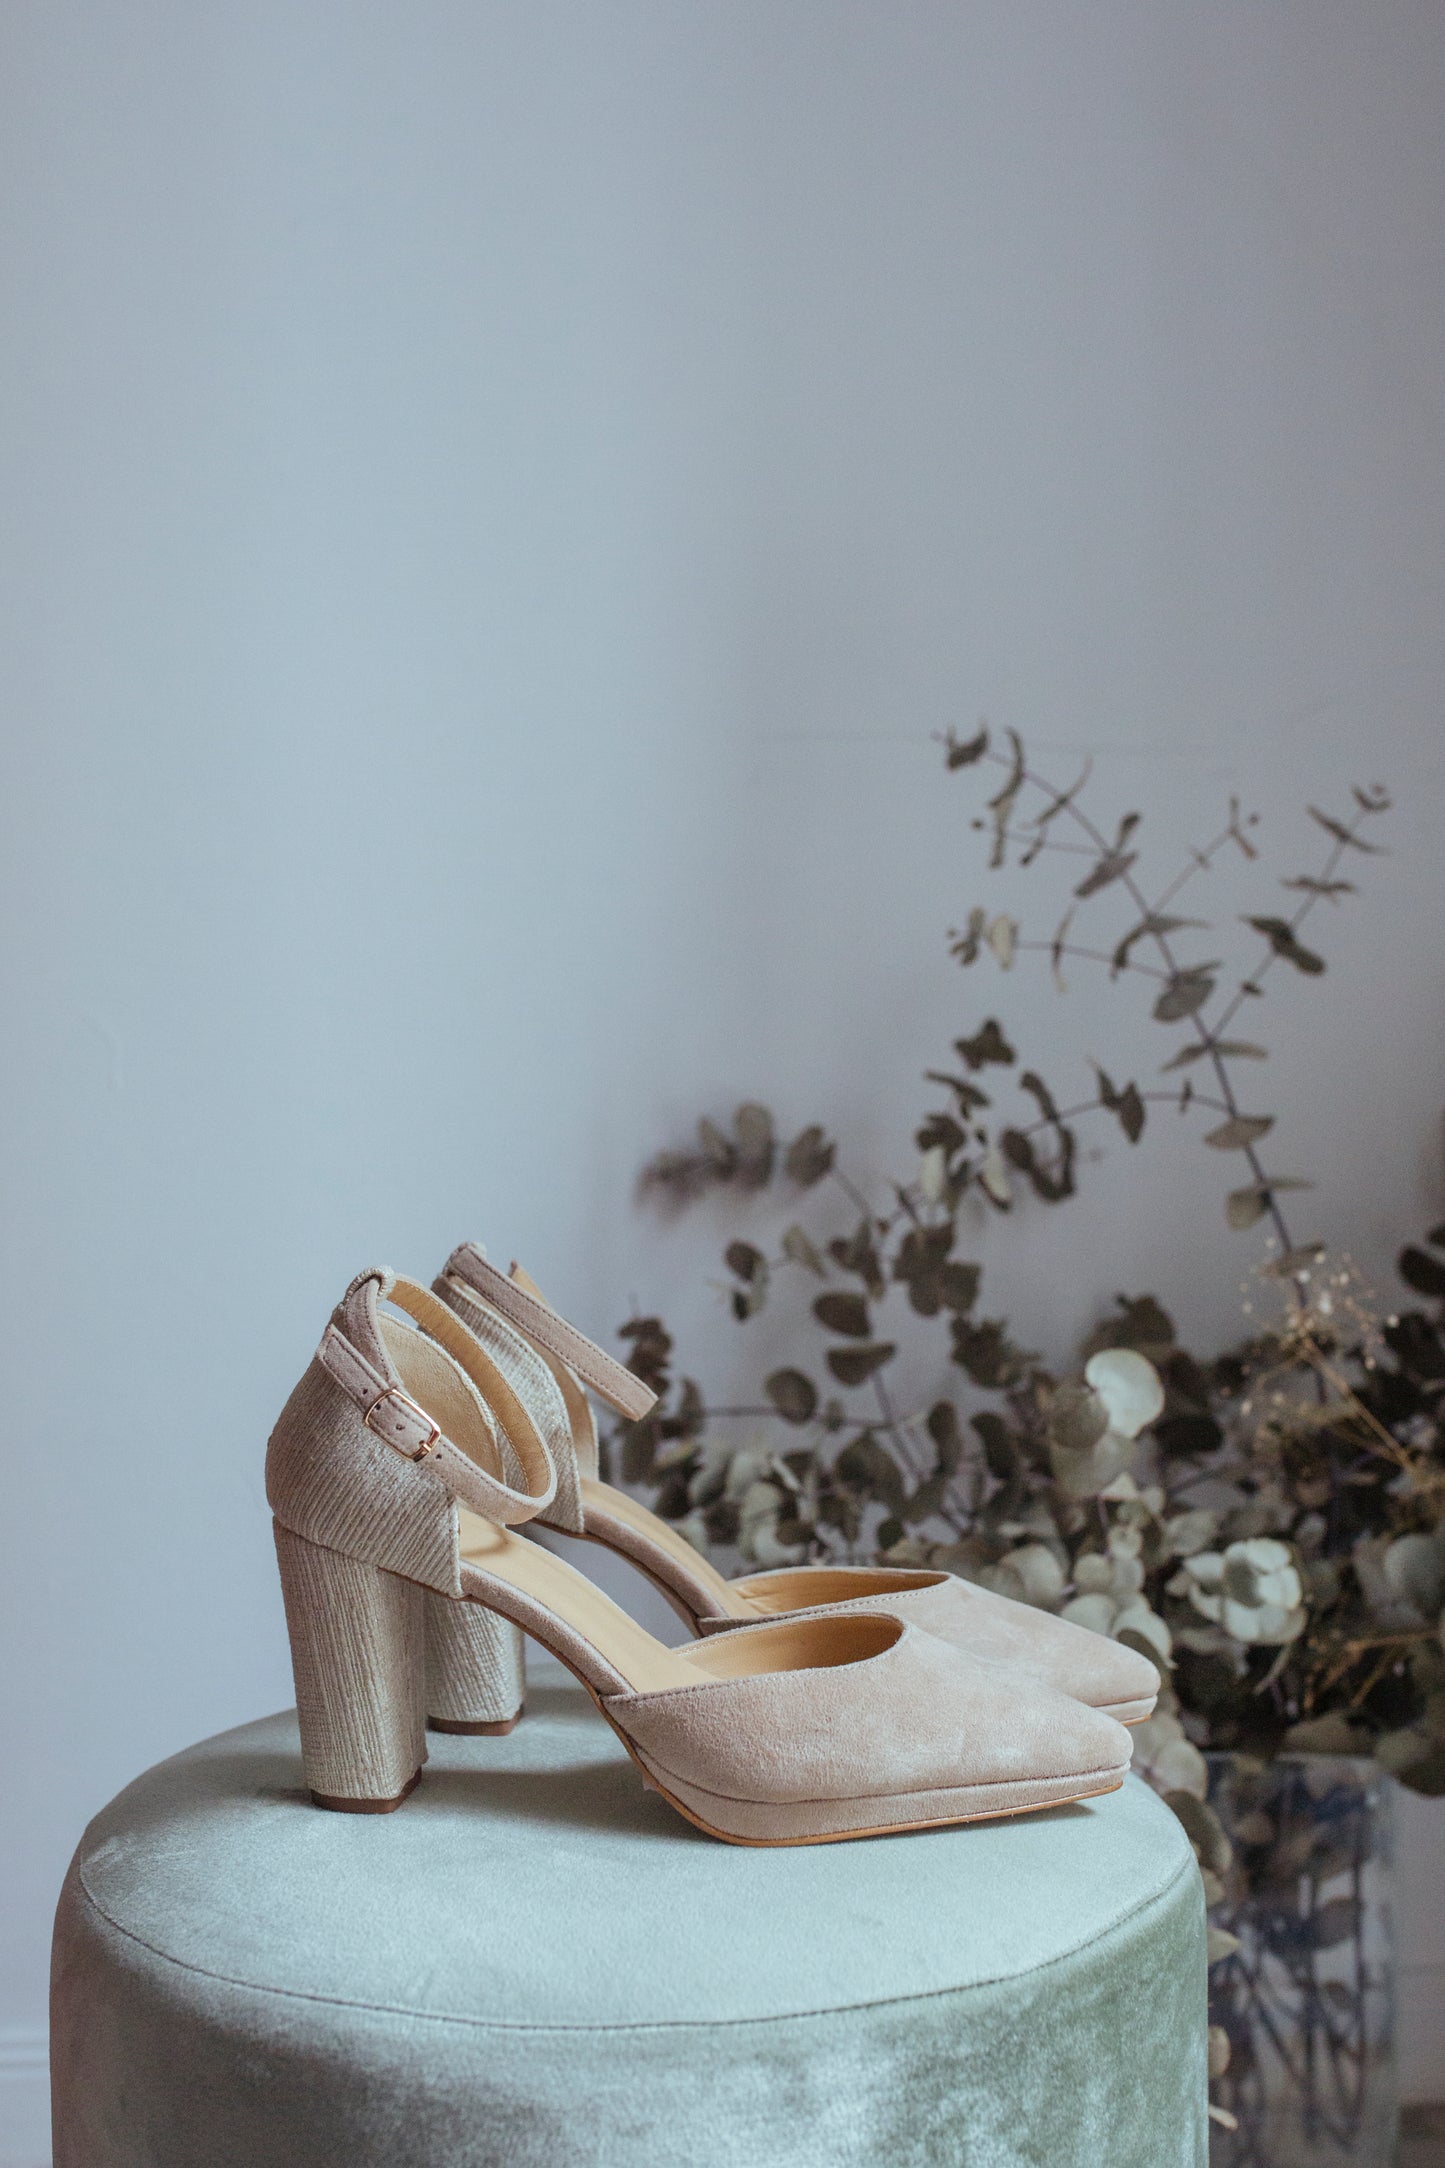 Helene Beige-tipo salón-ante, helene, liso, salón, tacon de 8, zapatos de color beige-Loovshoes